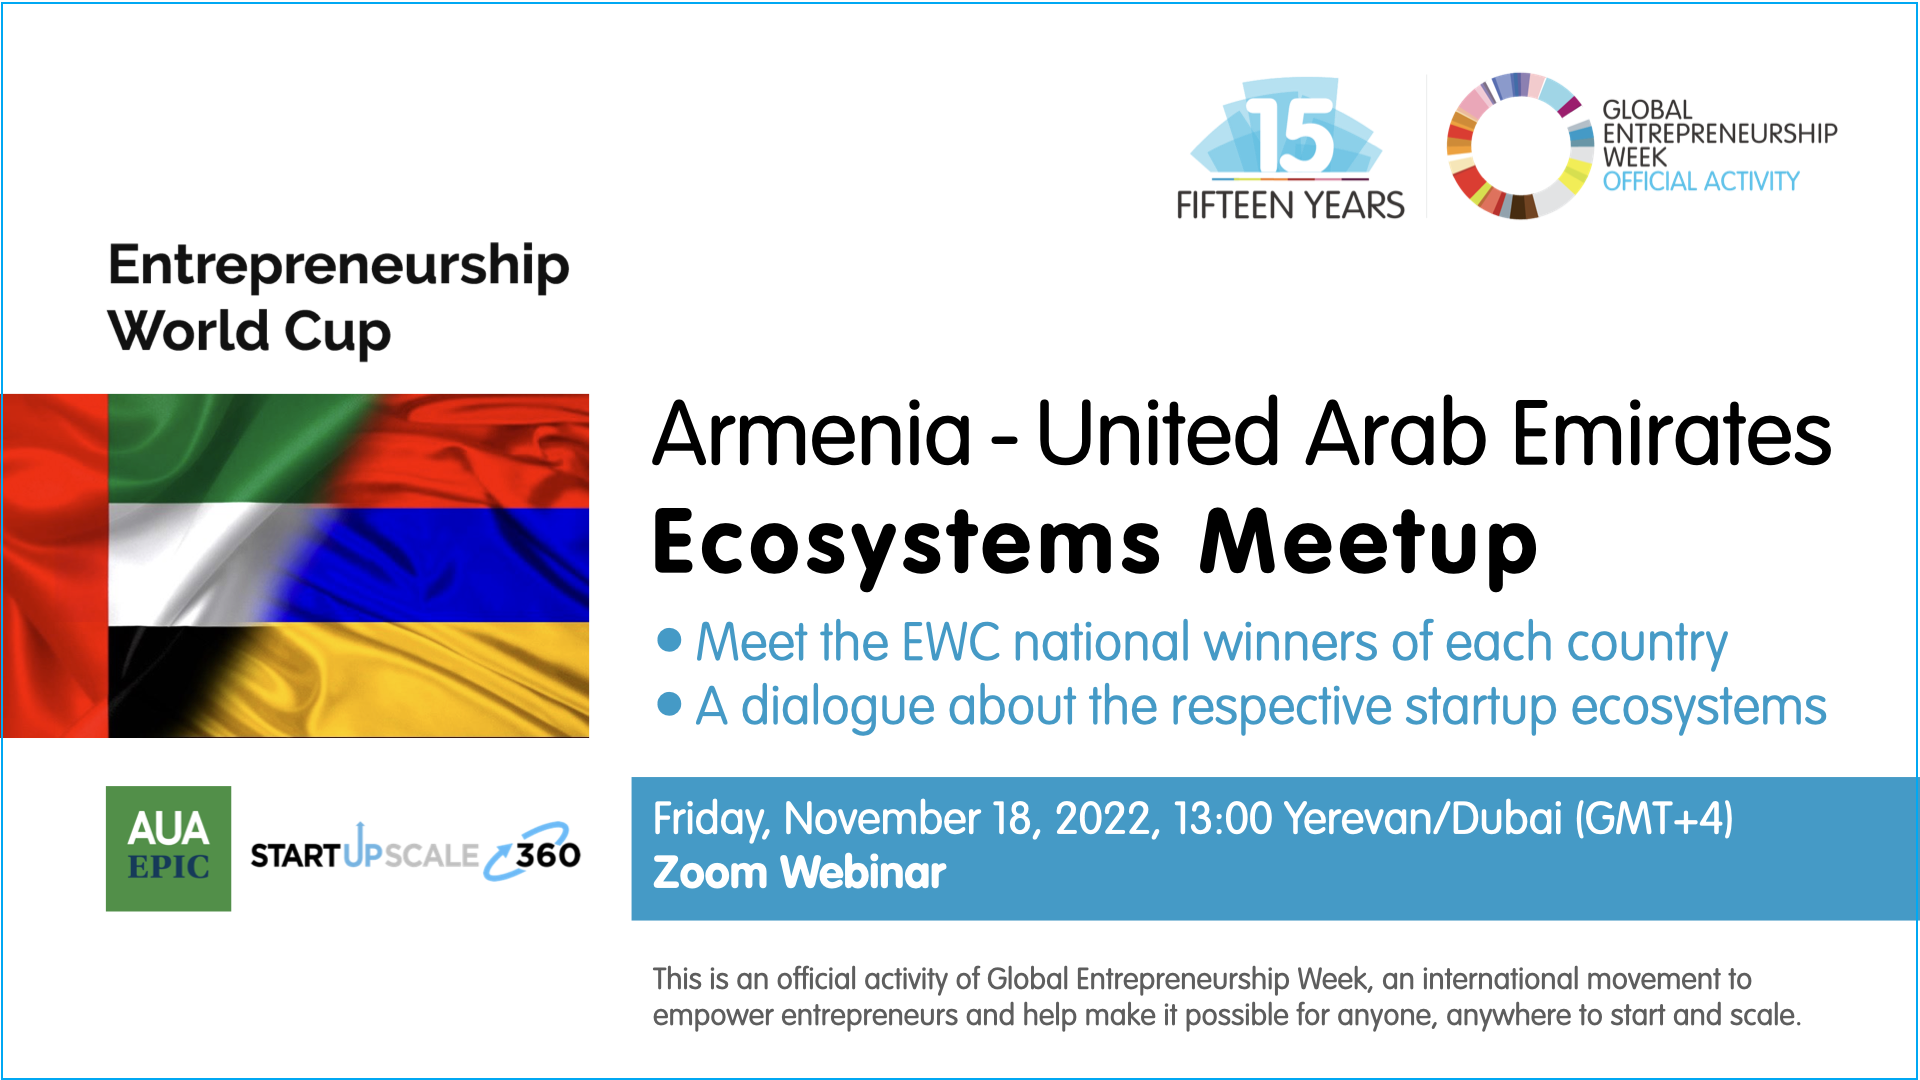 Armenia - United Arab Emirates Ecosystems Meetup